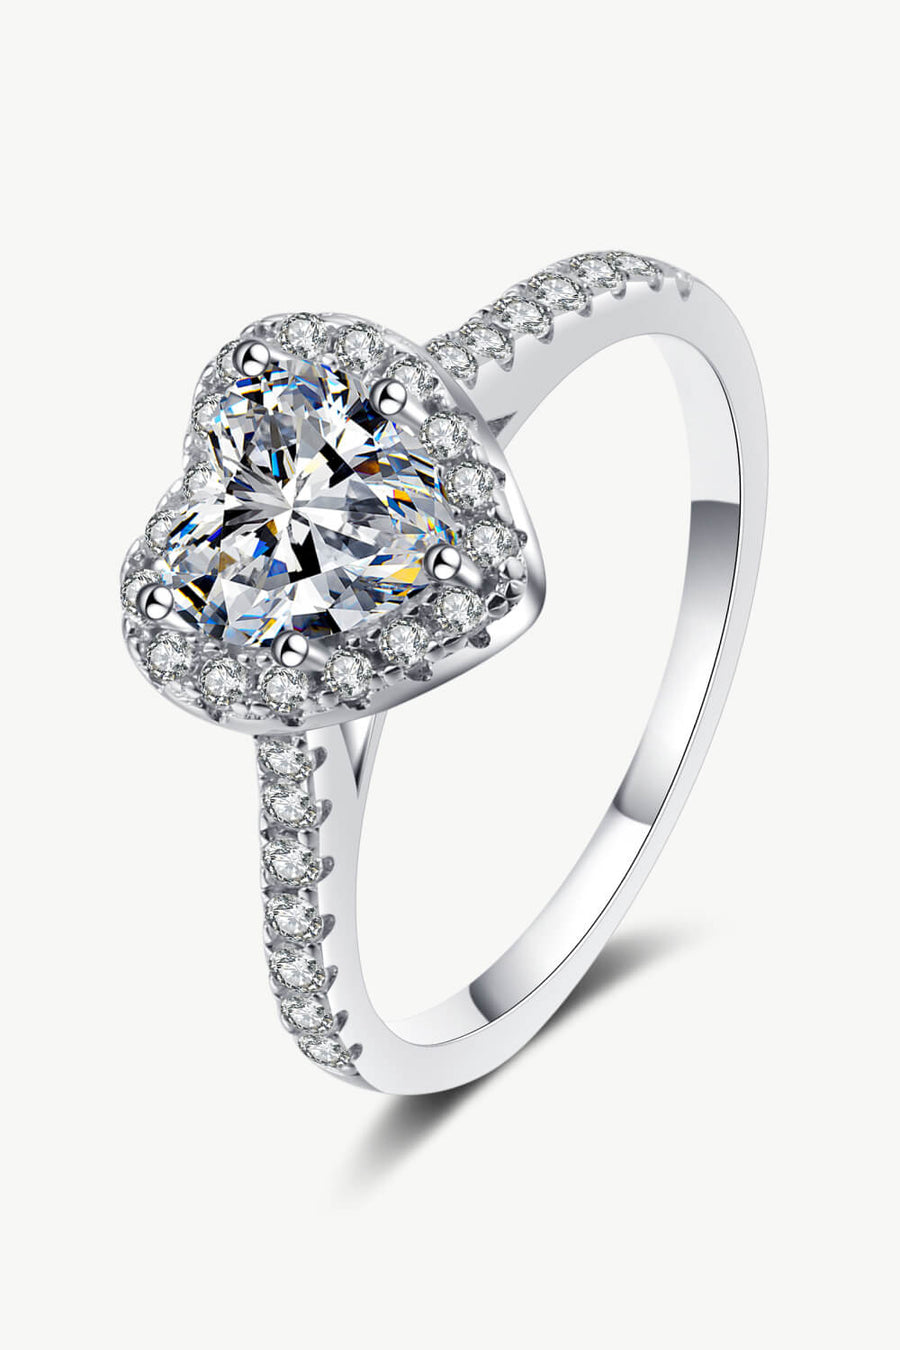 Best Diamond Ring Jewelry Gifts for Women | 1 Carat Heart-Shaped Diamond Ring | MASON New York